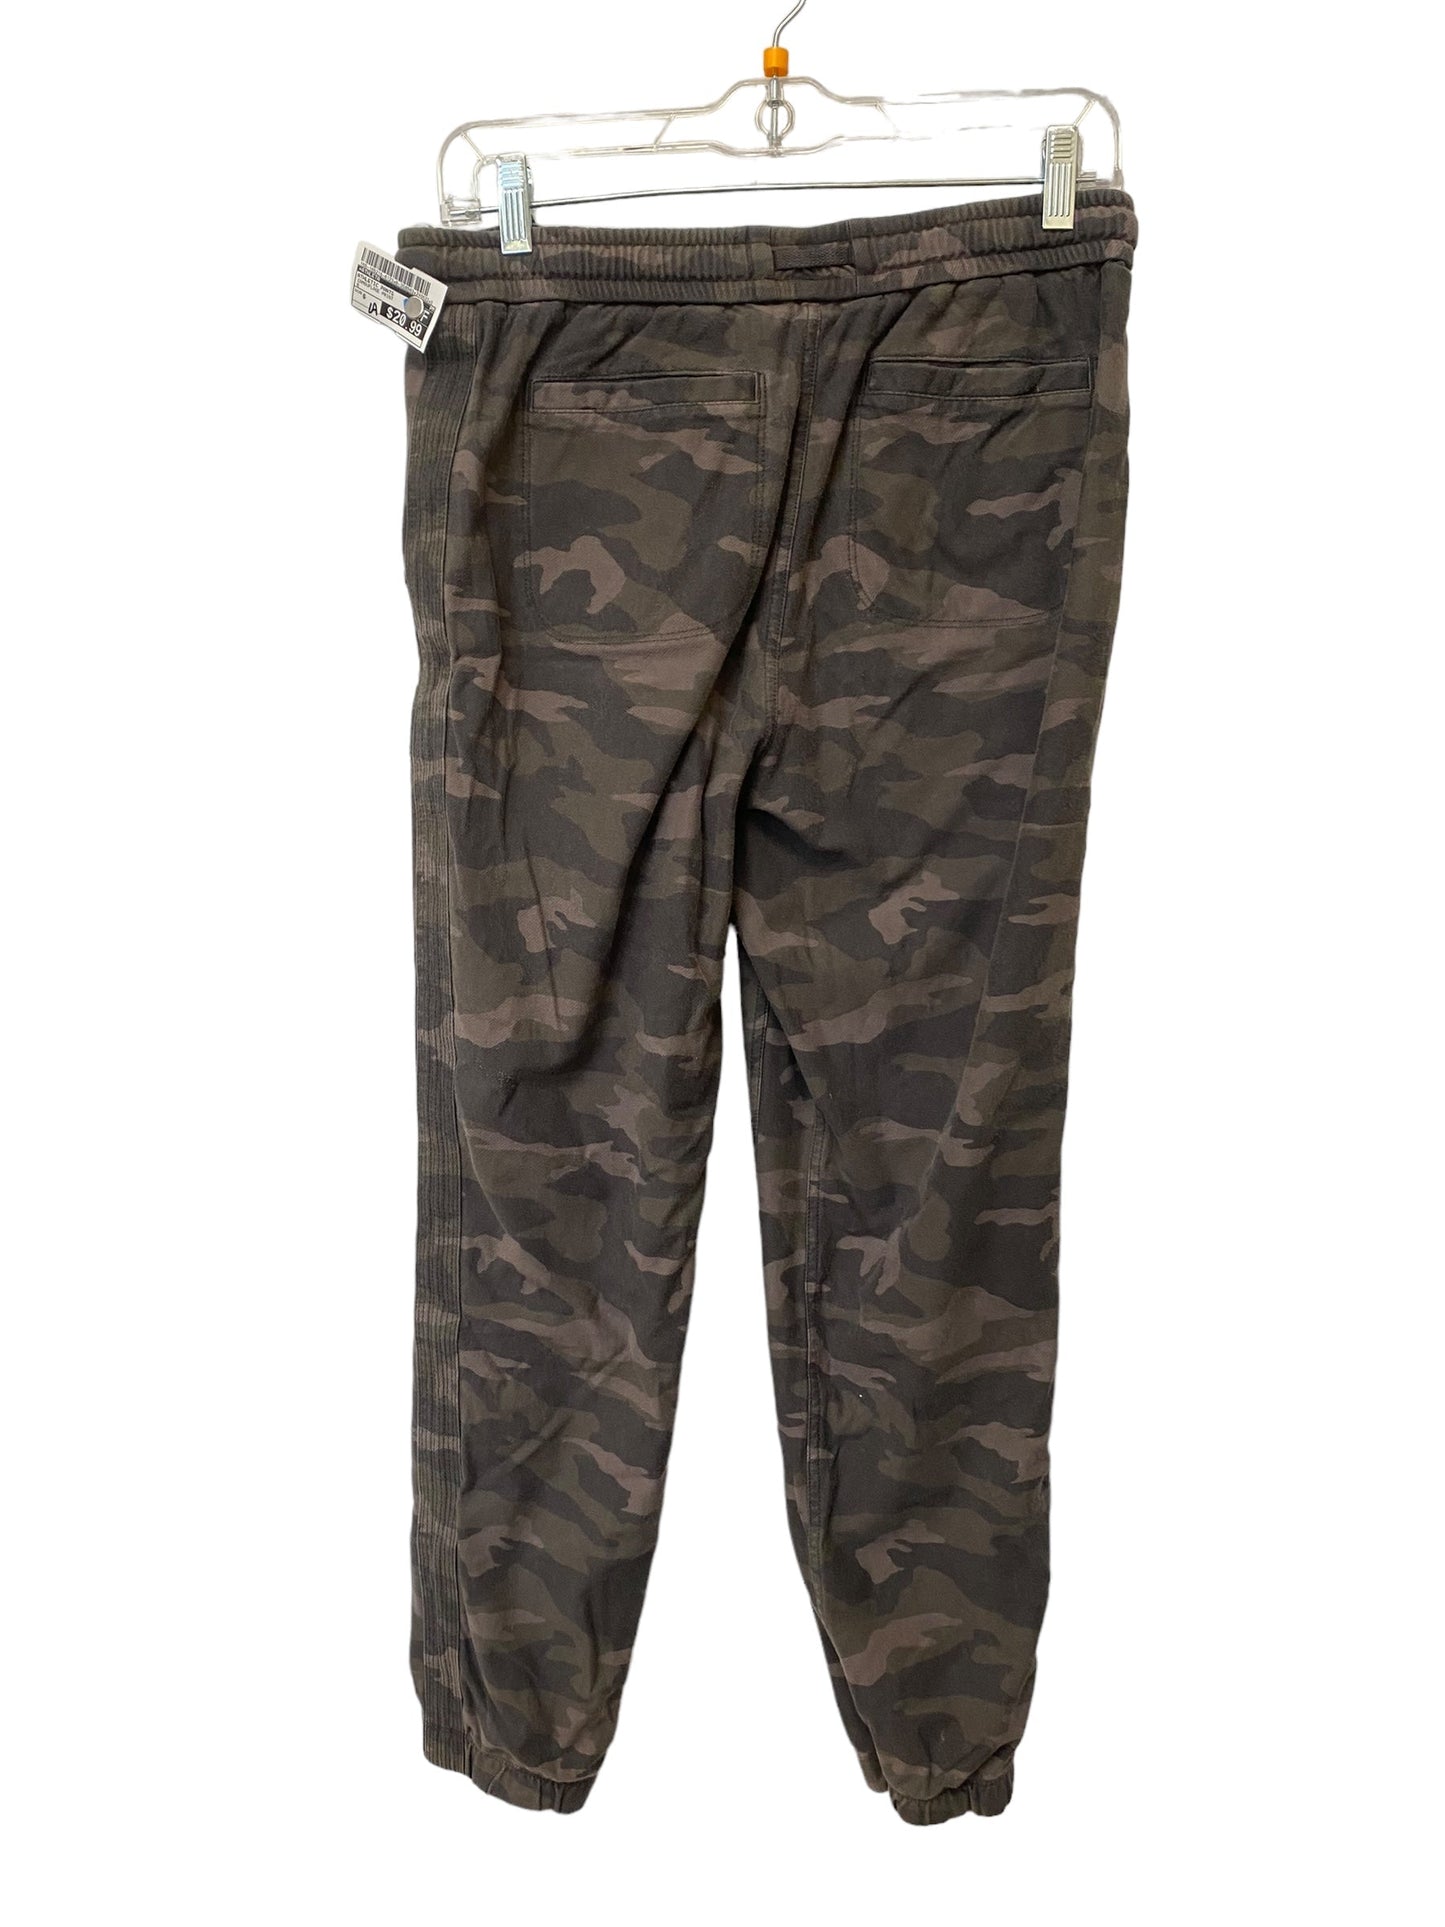 Camouflage Print Athletic Pants Athleta, Size 6